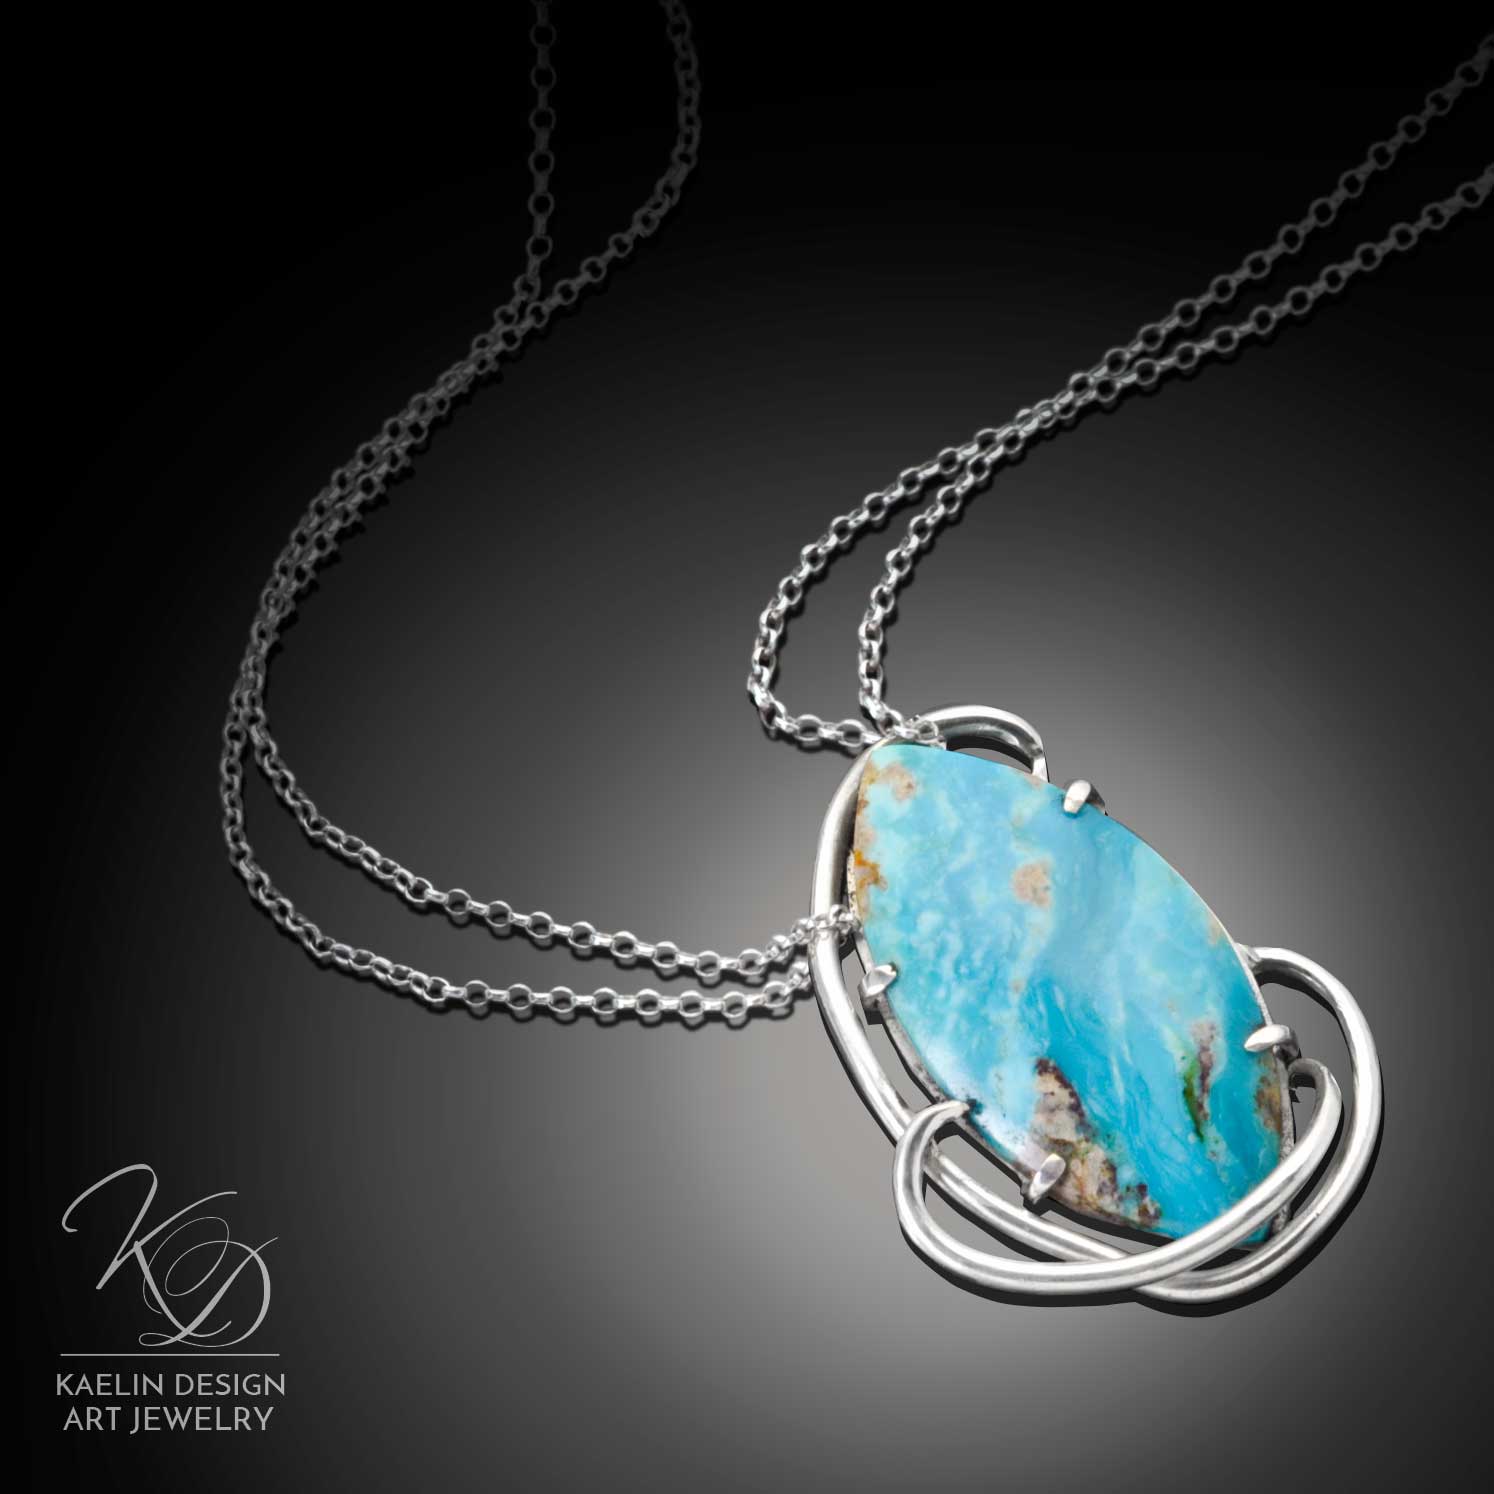 Sea Swept Turquoise Art Jewelry Pendant by Kaelin Design